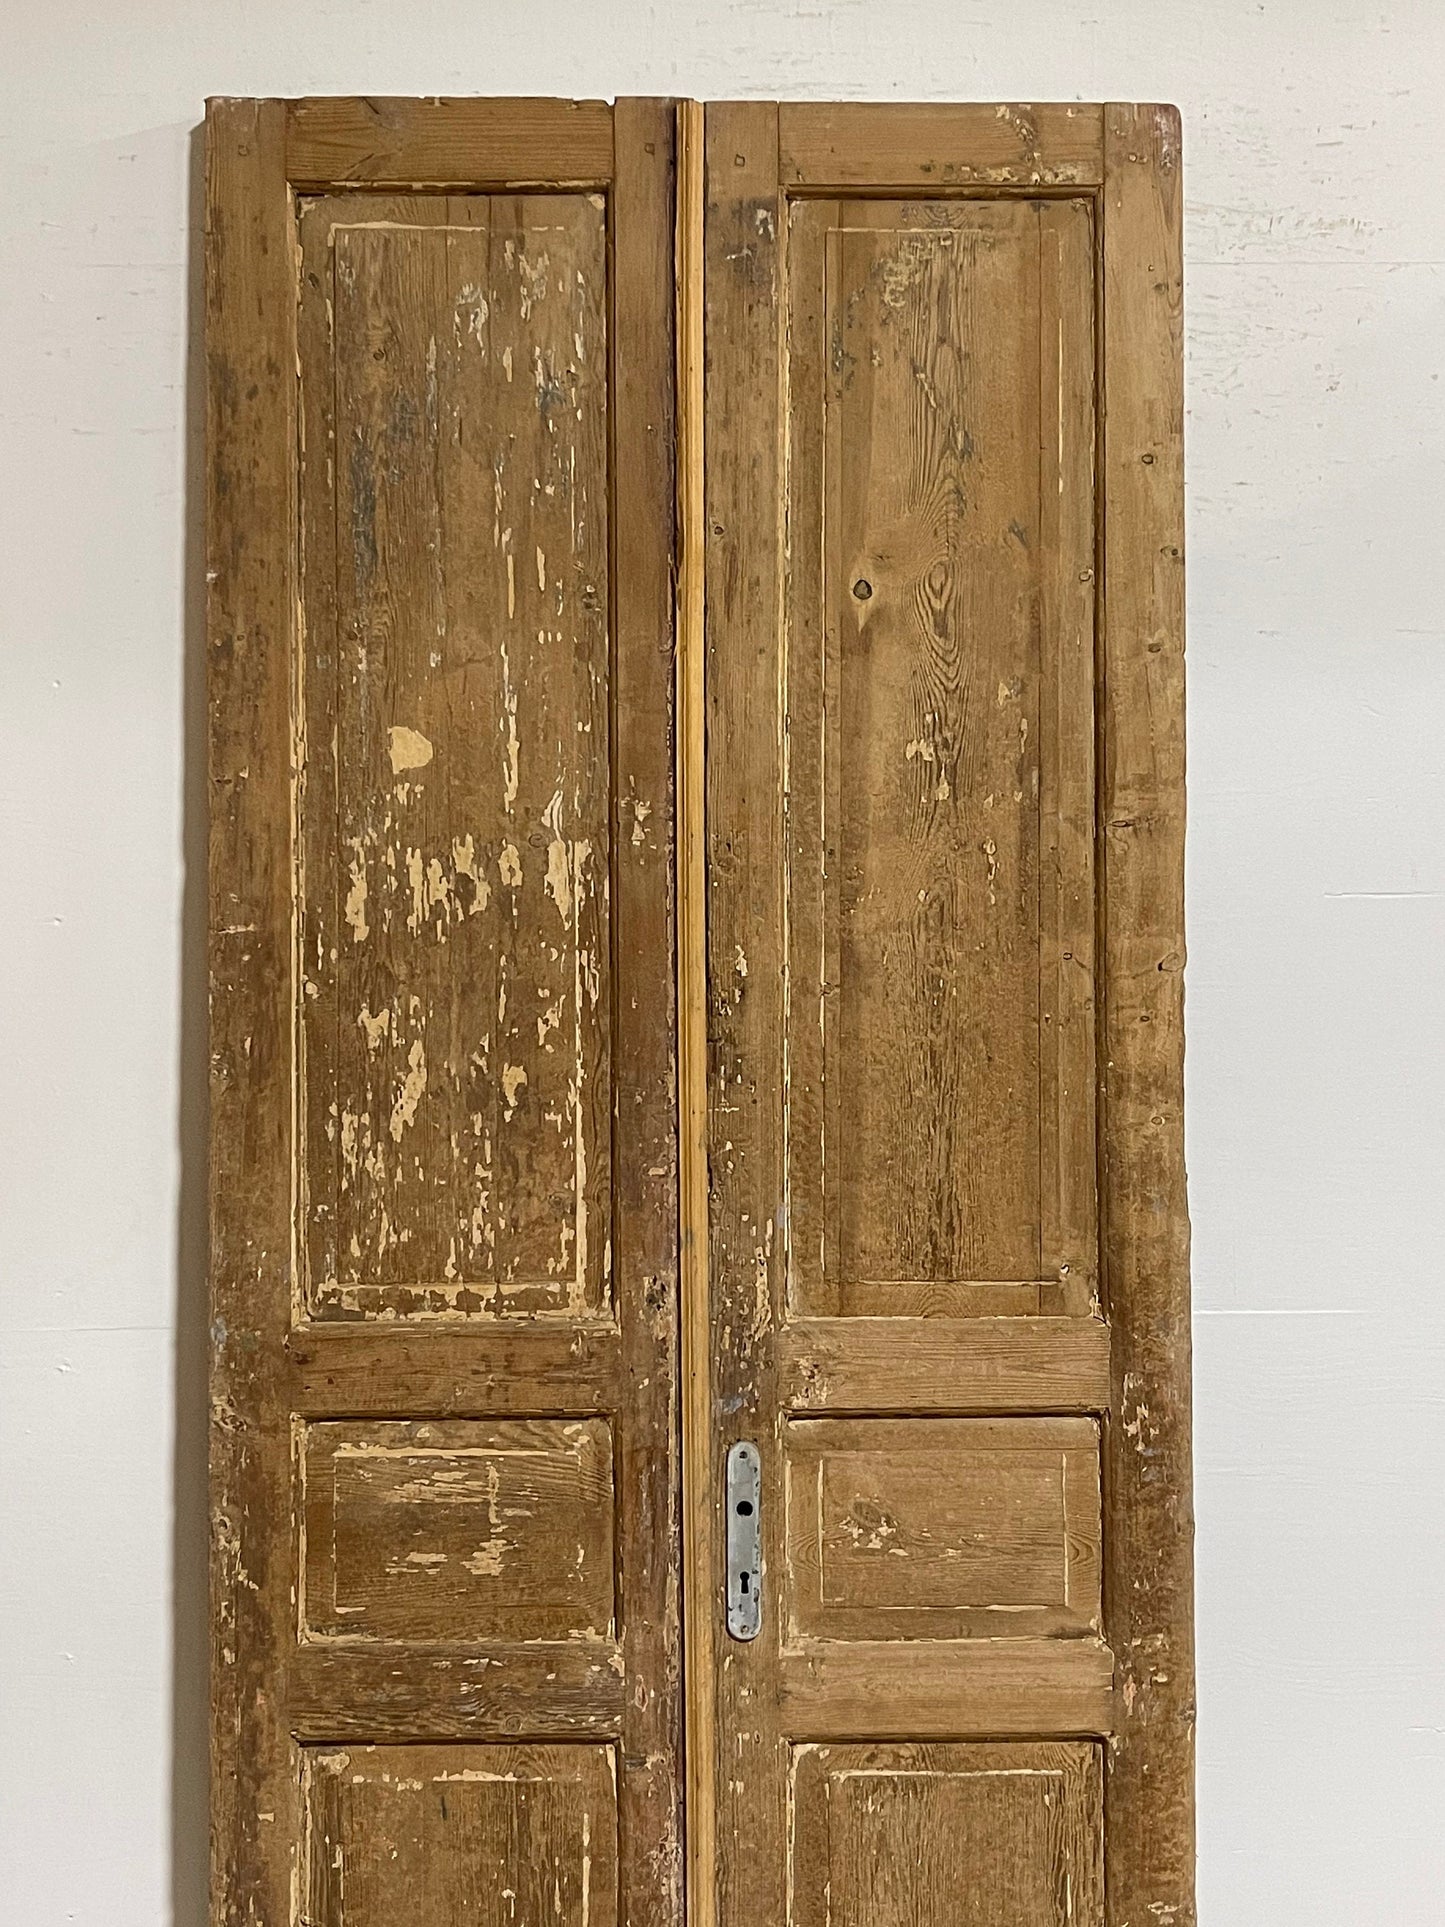 Antique French panel doors (102.5x43.25) G0178s